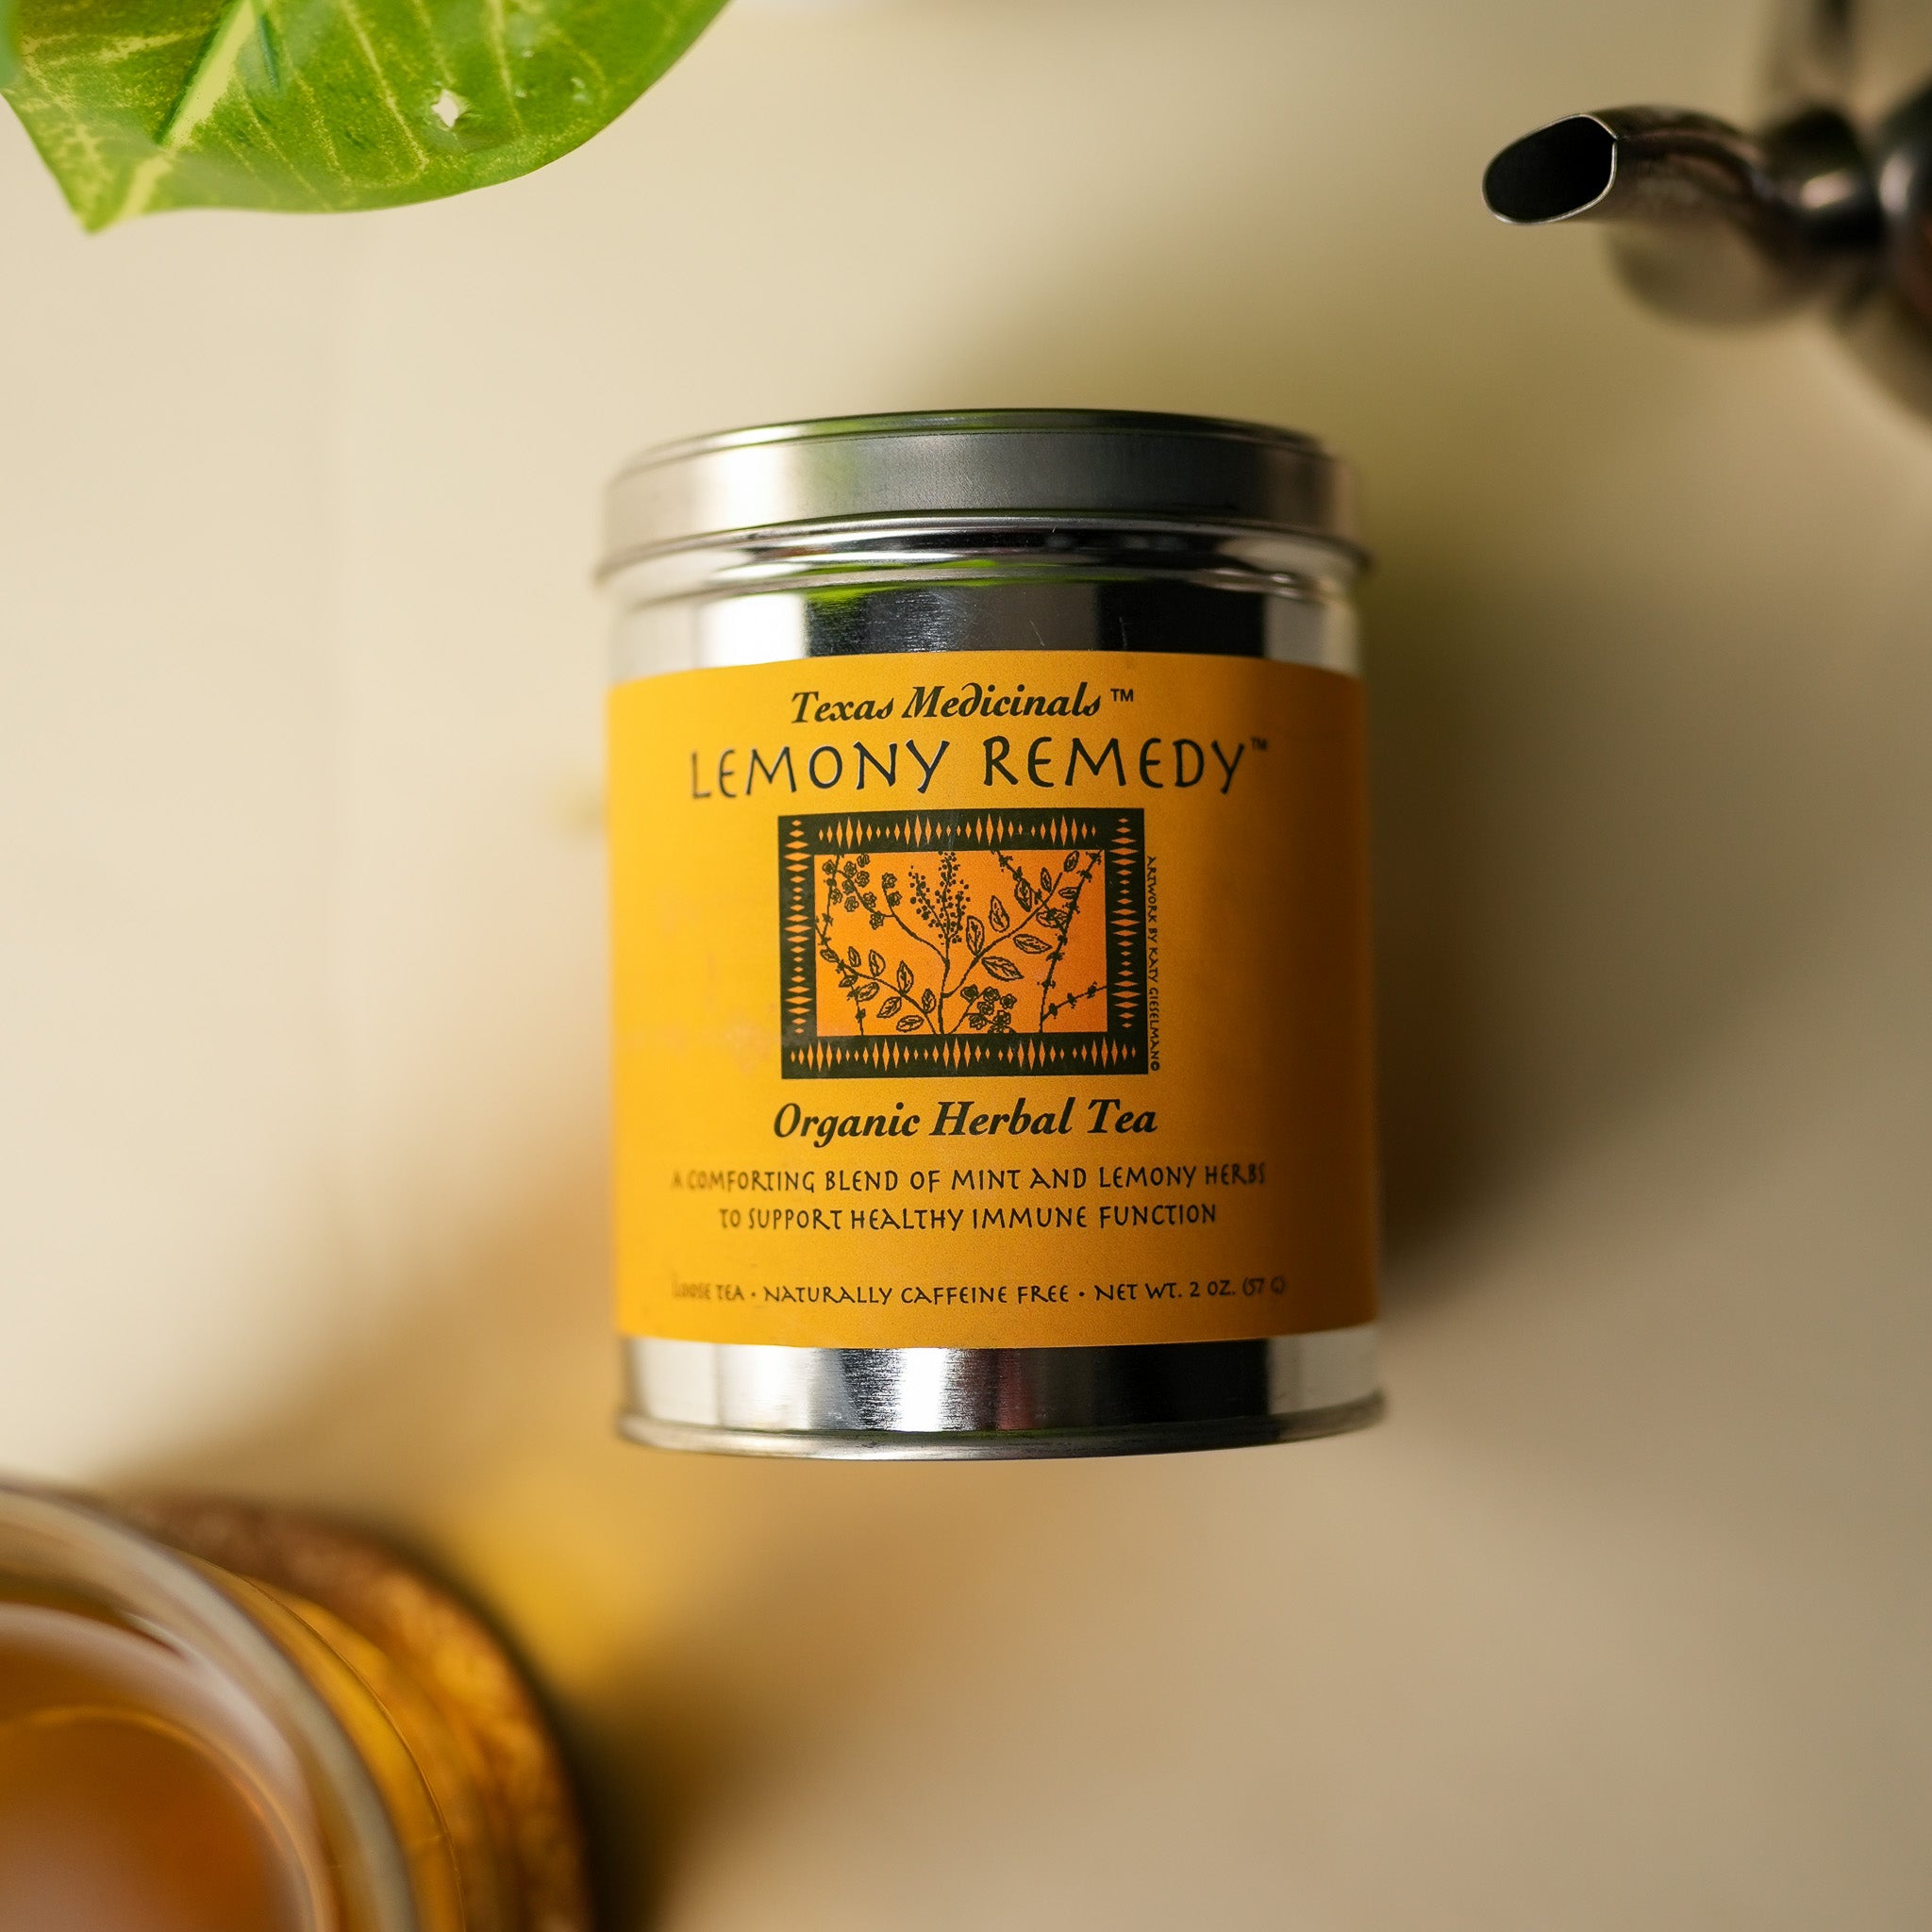 Lemony Remedy Organic Herbal Tea